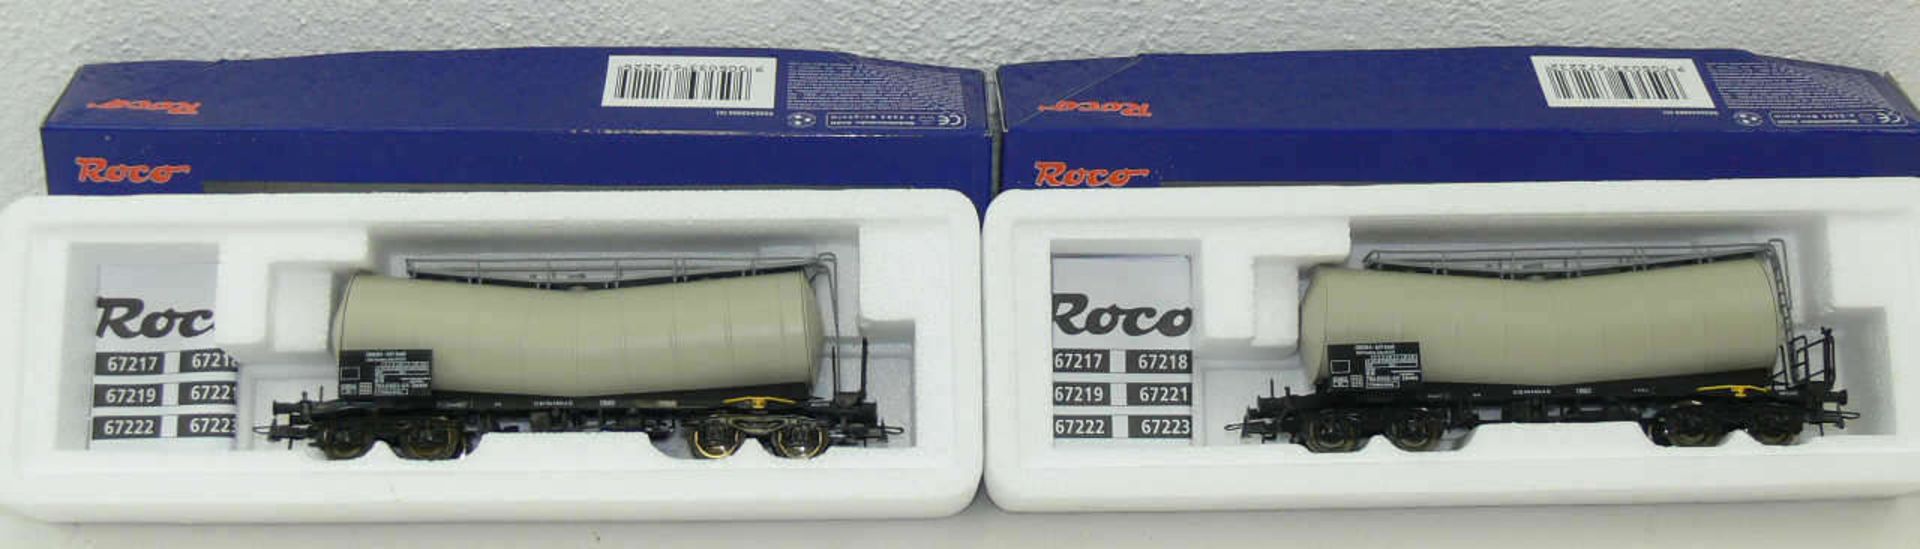 Roco H0 67223/5, 2 x Knick - Kesselwagen "Ermewa" der DB. In OVP.